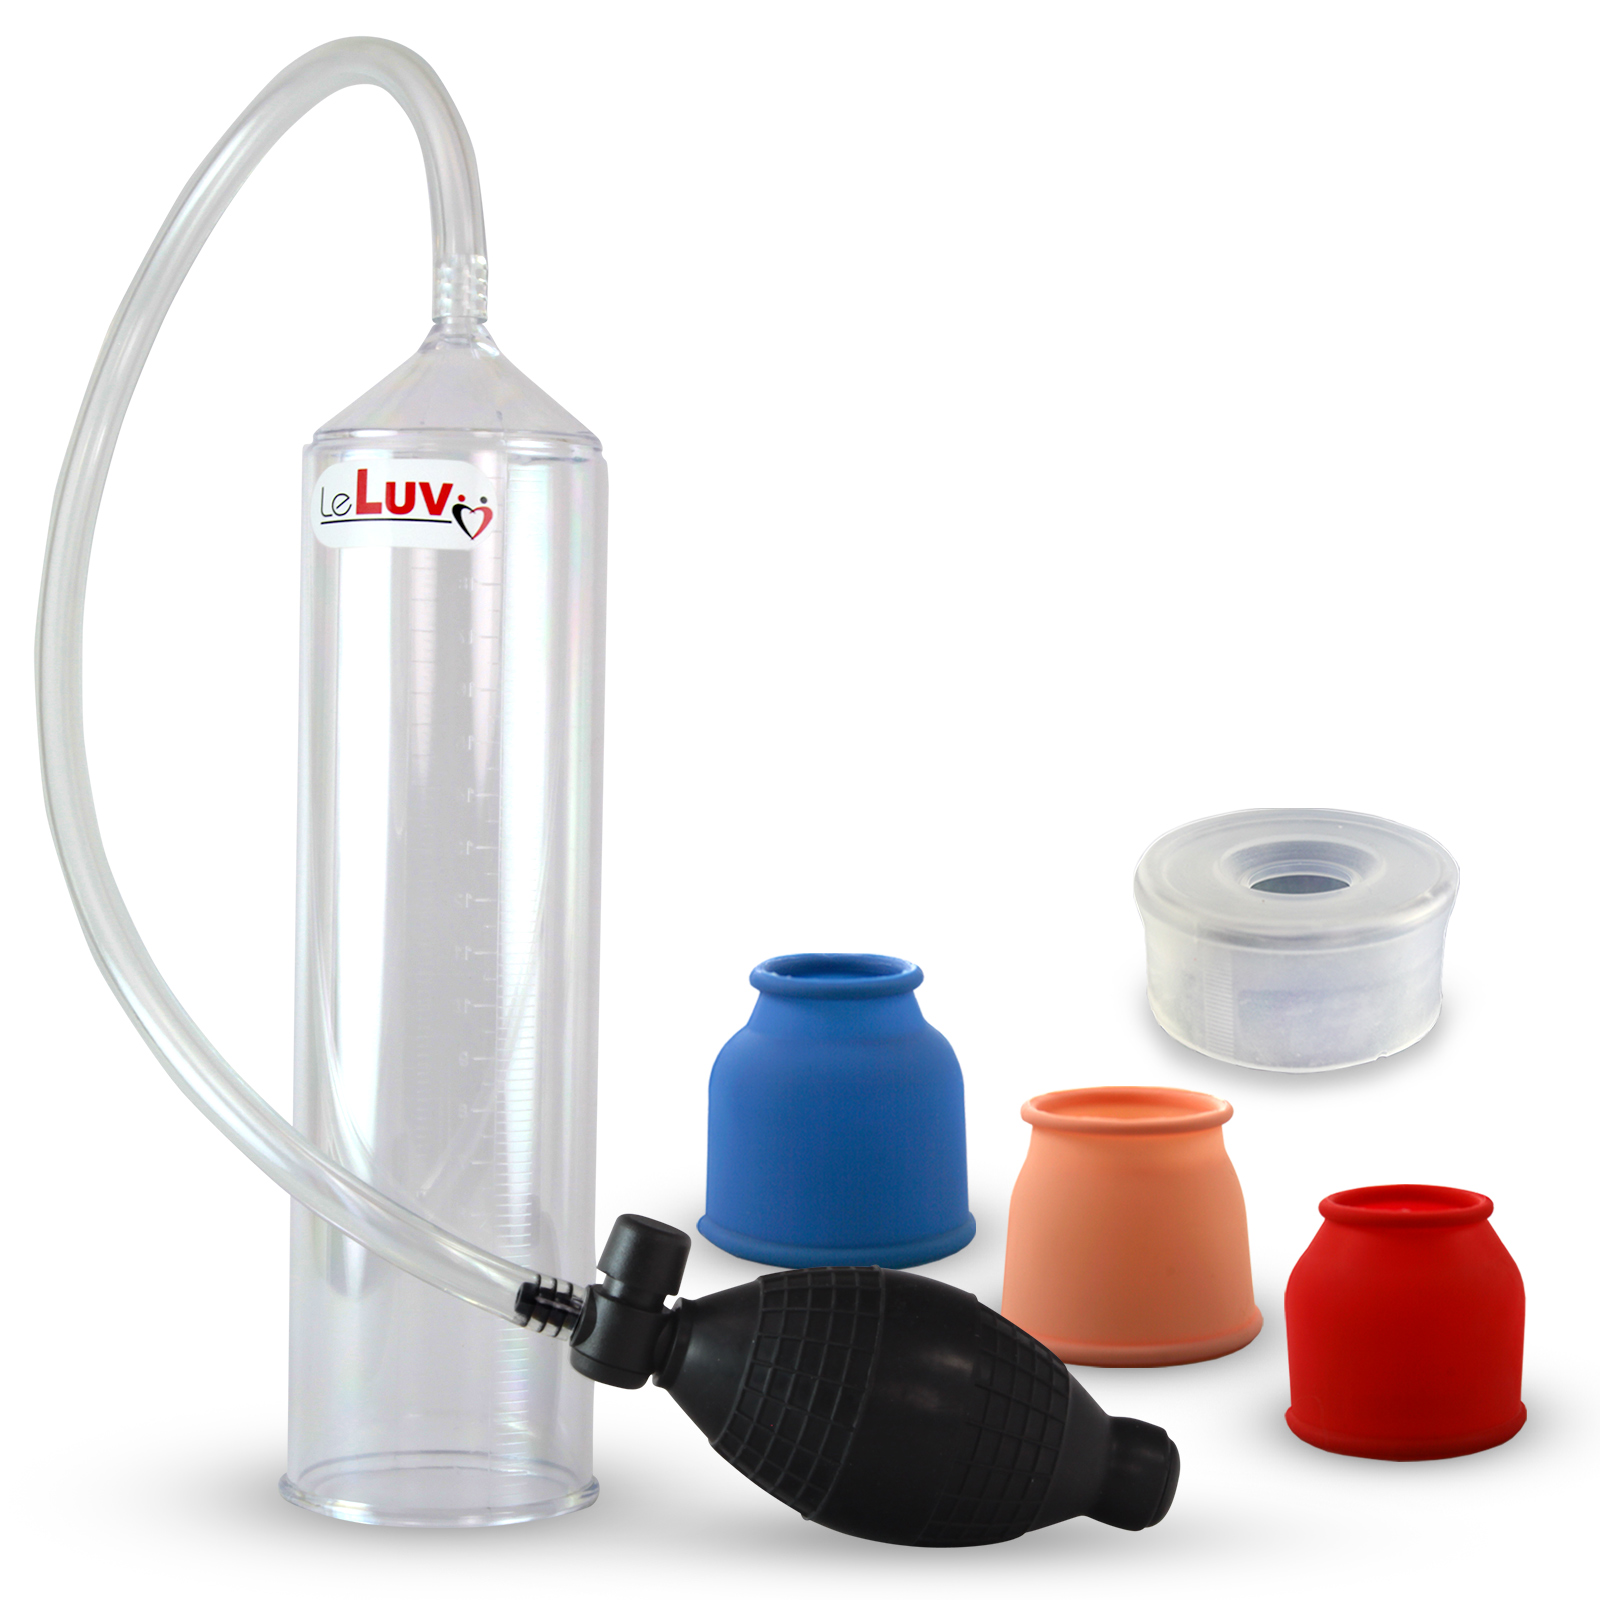 LeLuv Penis Vacuum Pump EasyOp Bgrip Small Medium Large and Clear Seals